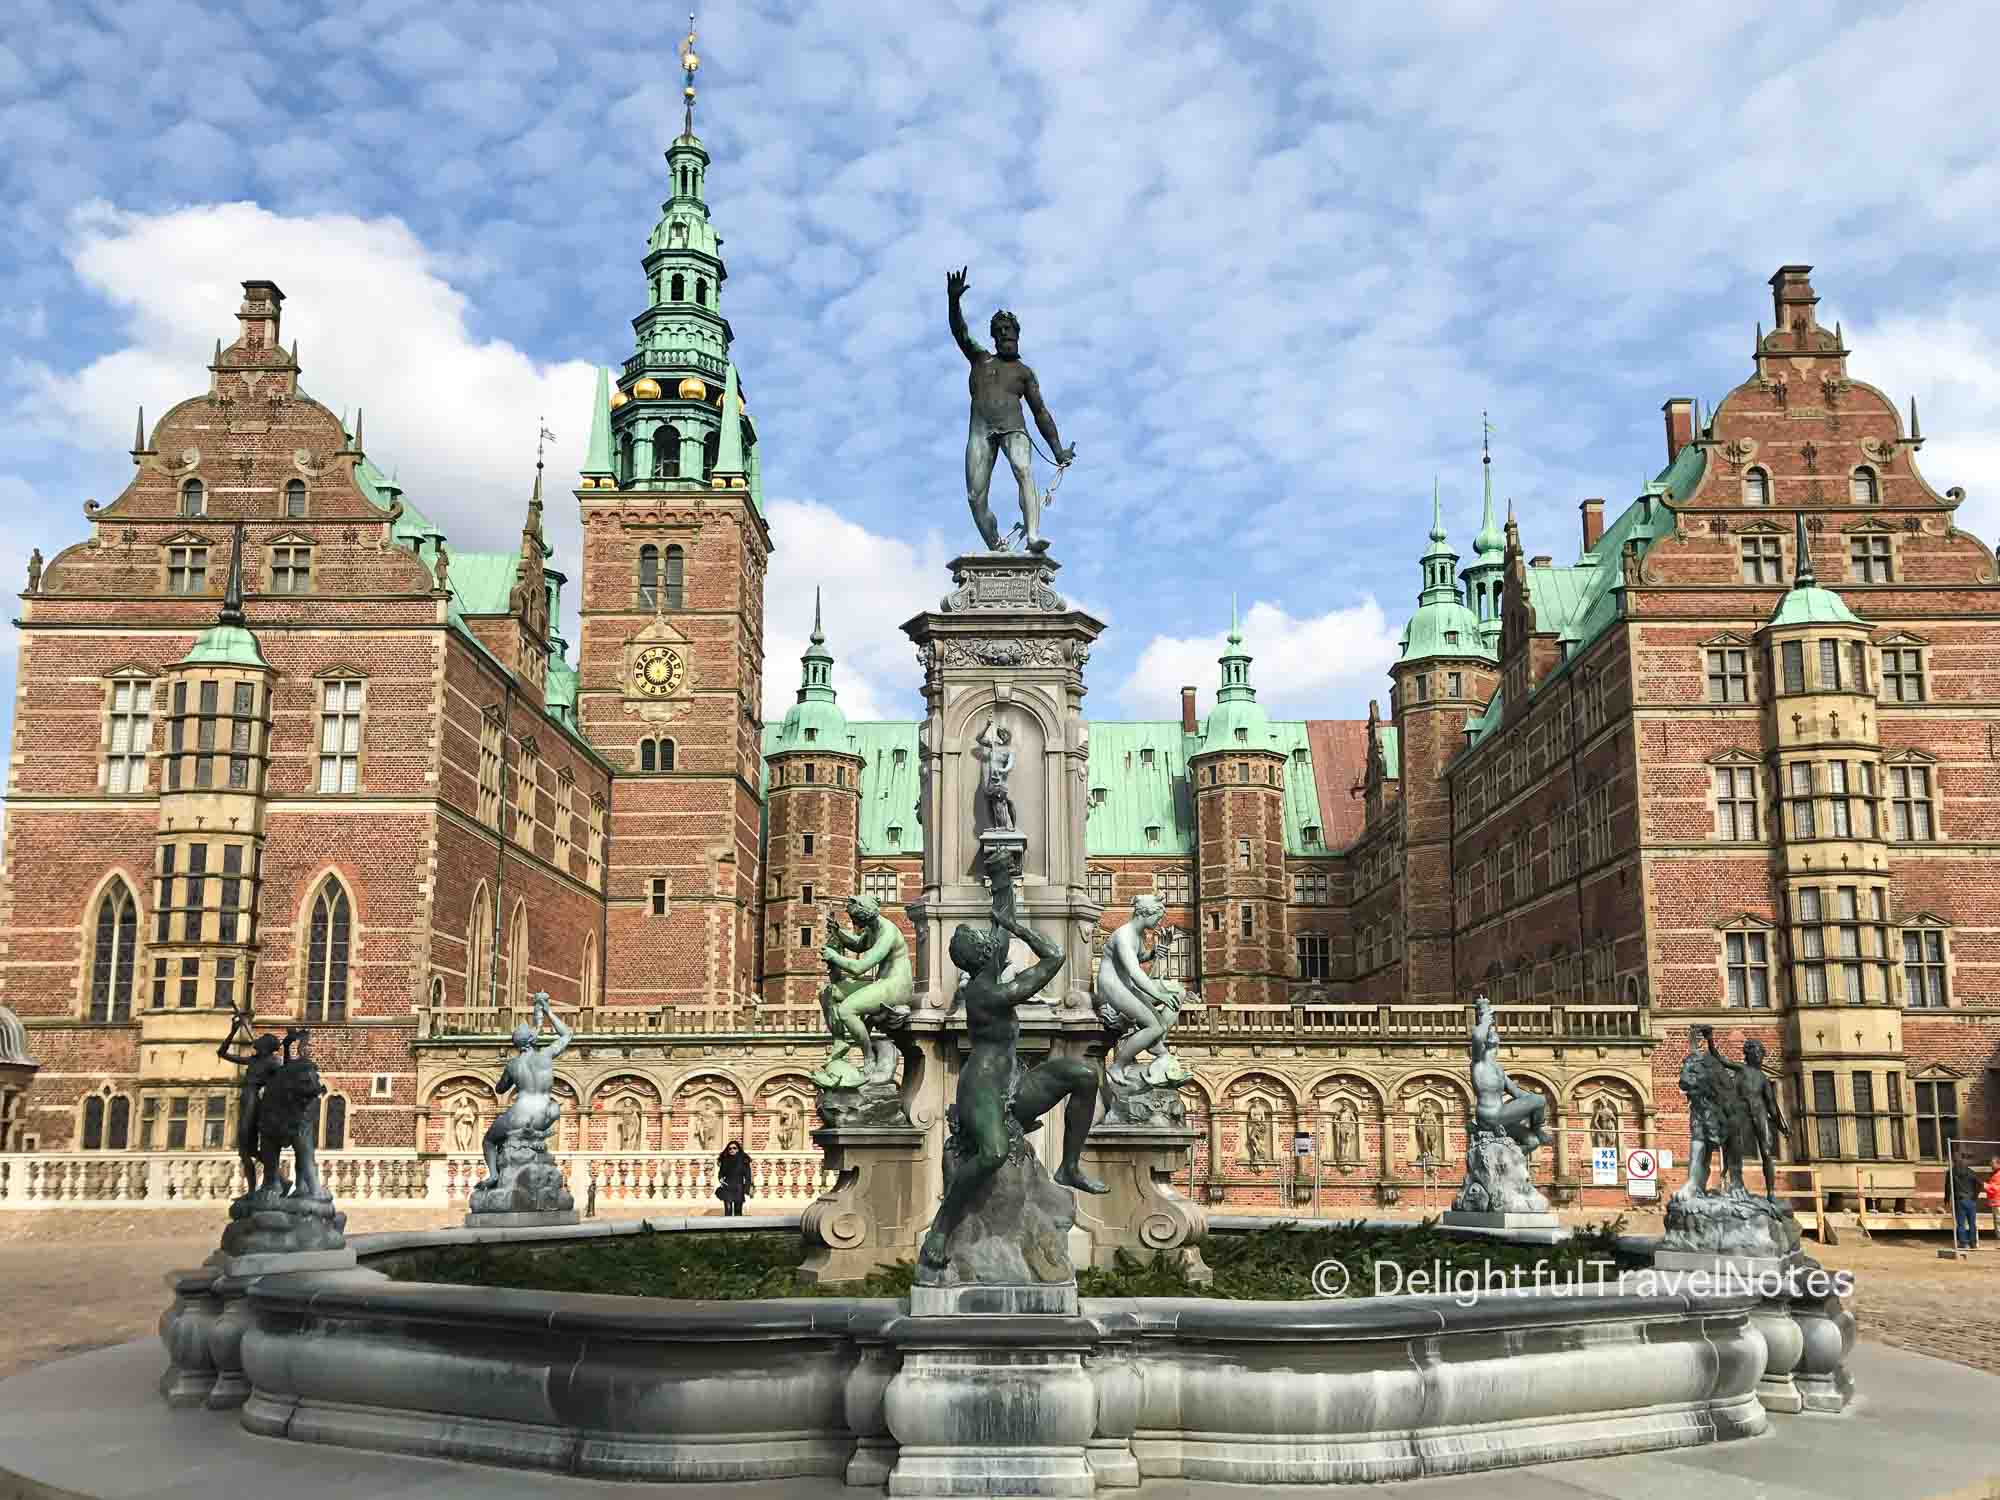 Facade of Frederiksborg Castle in Denmark.